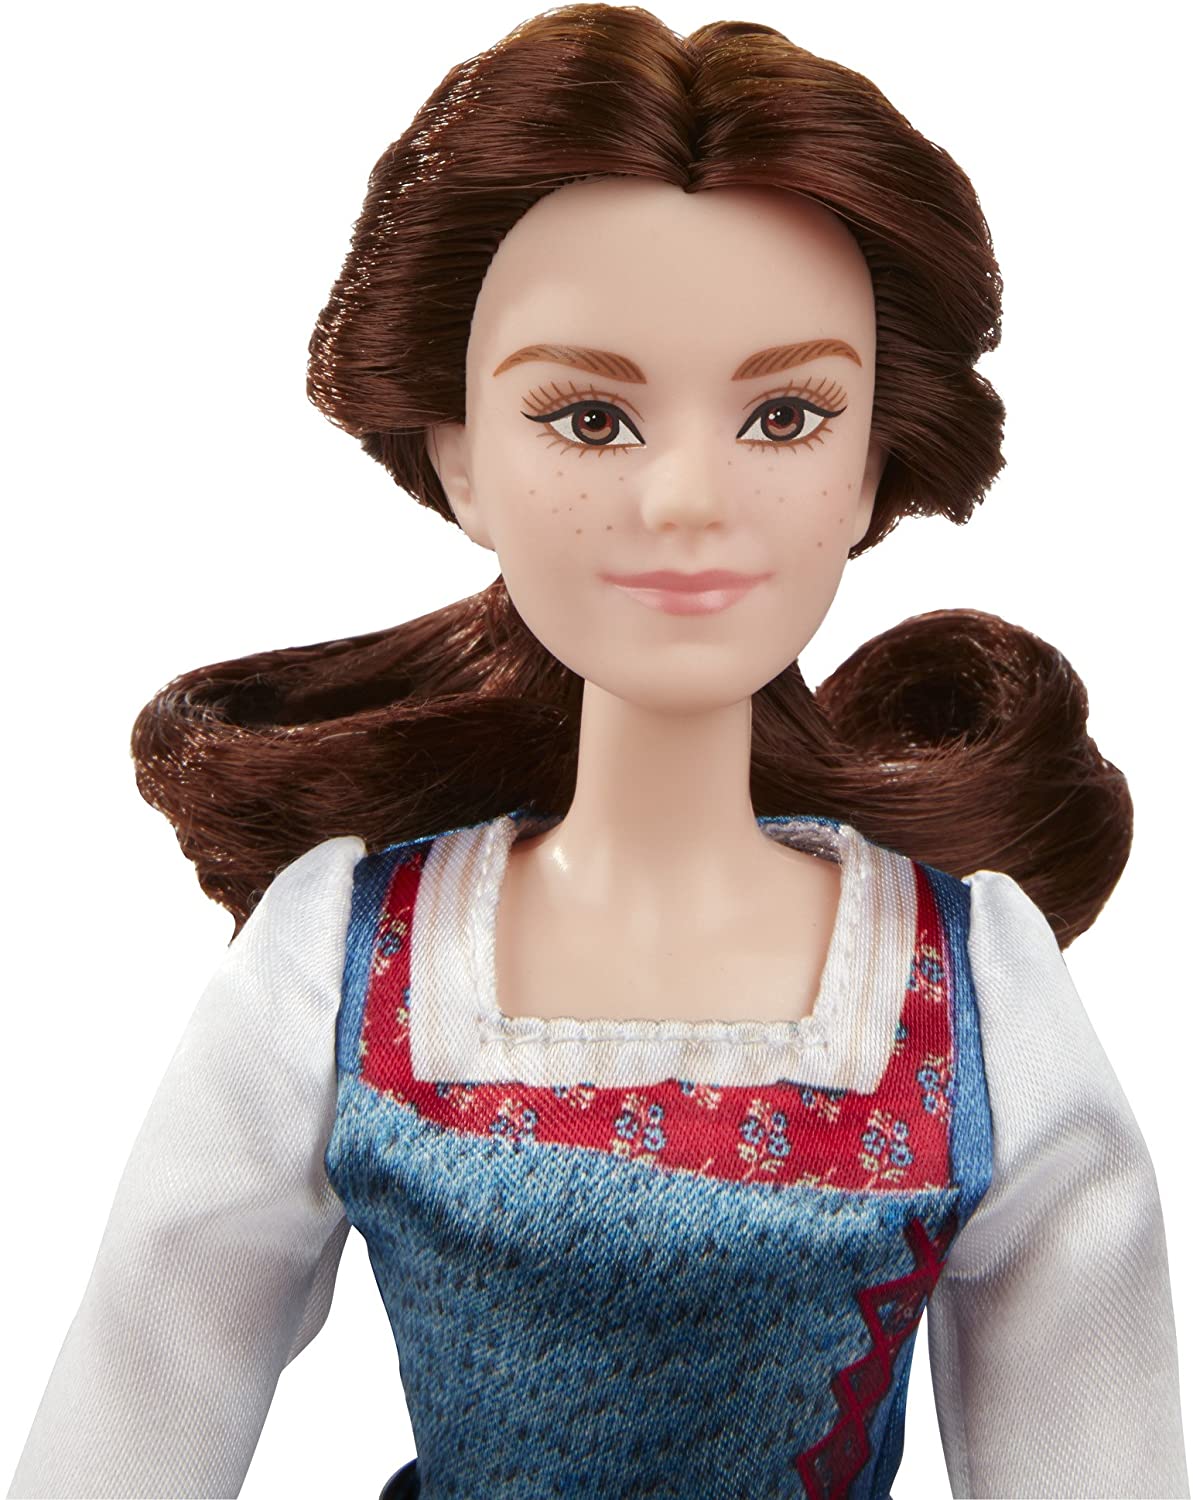 Disney Frozen Classic Doll - Anna | Hasbro